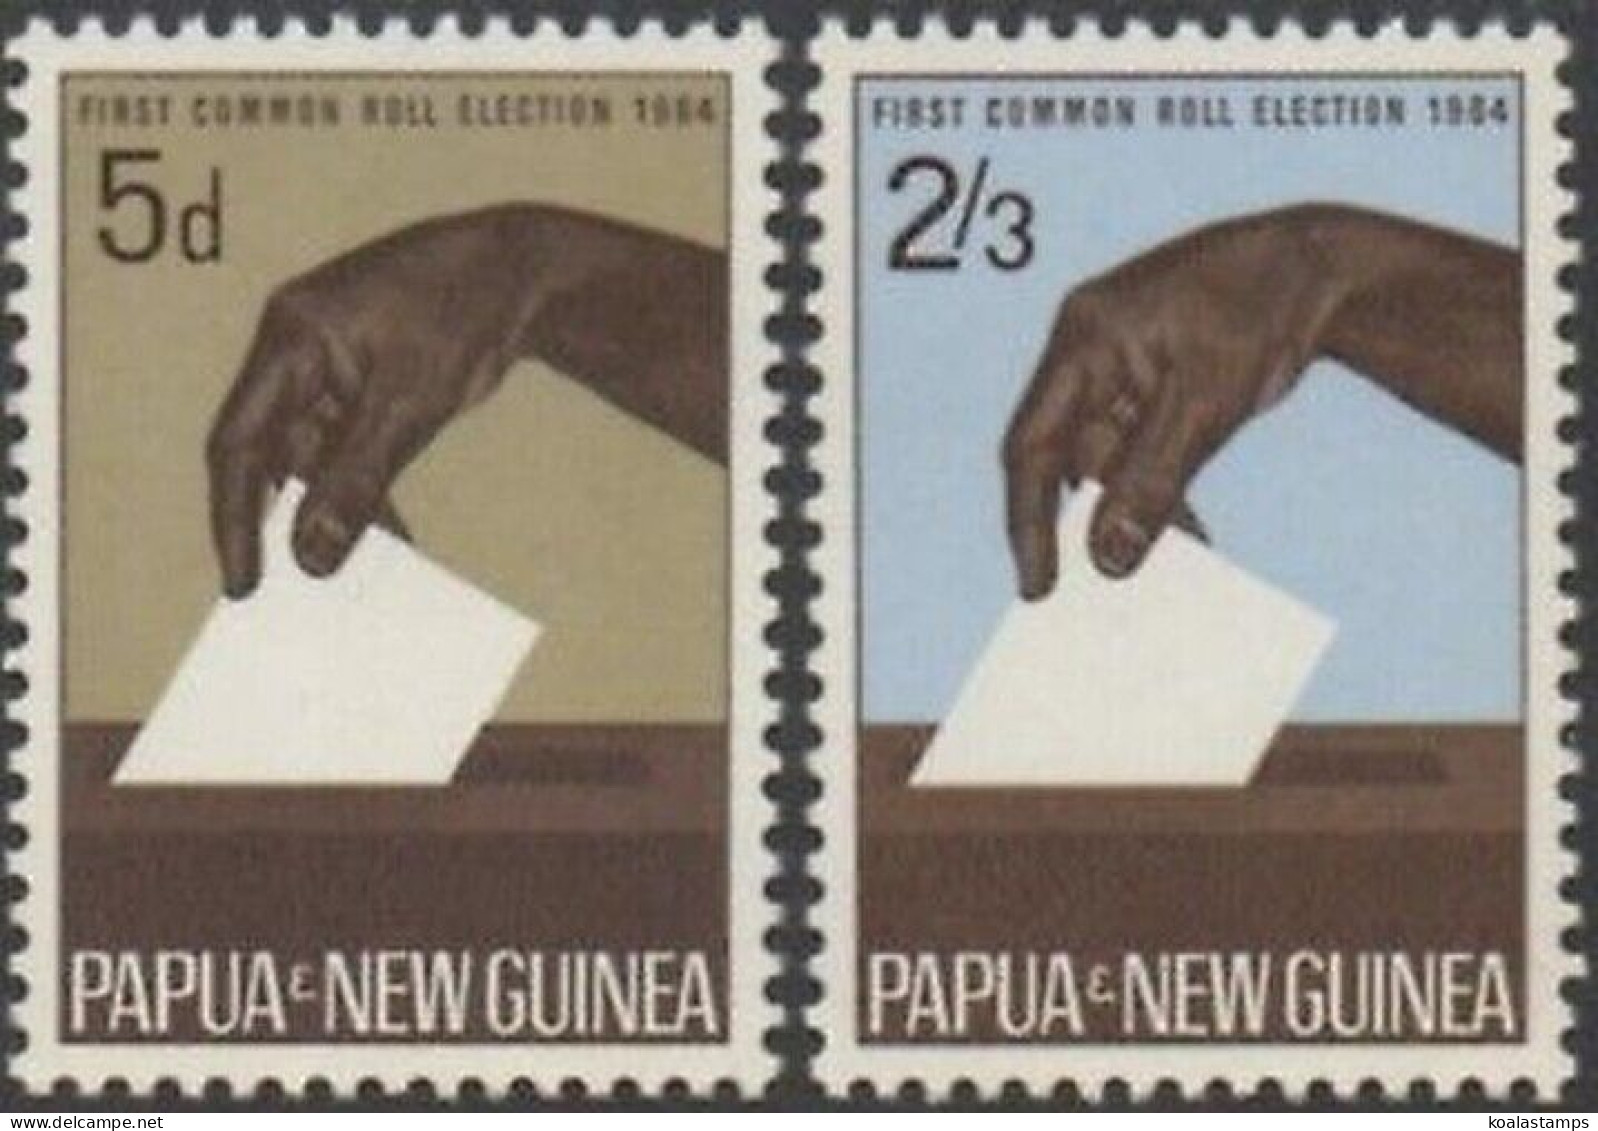 Papua New Guinea 1964 SG55-56 5d Casting Vote Set MNH - Papua New Guinea